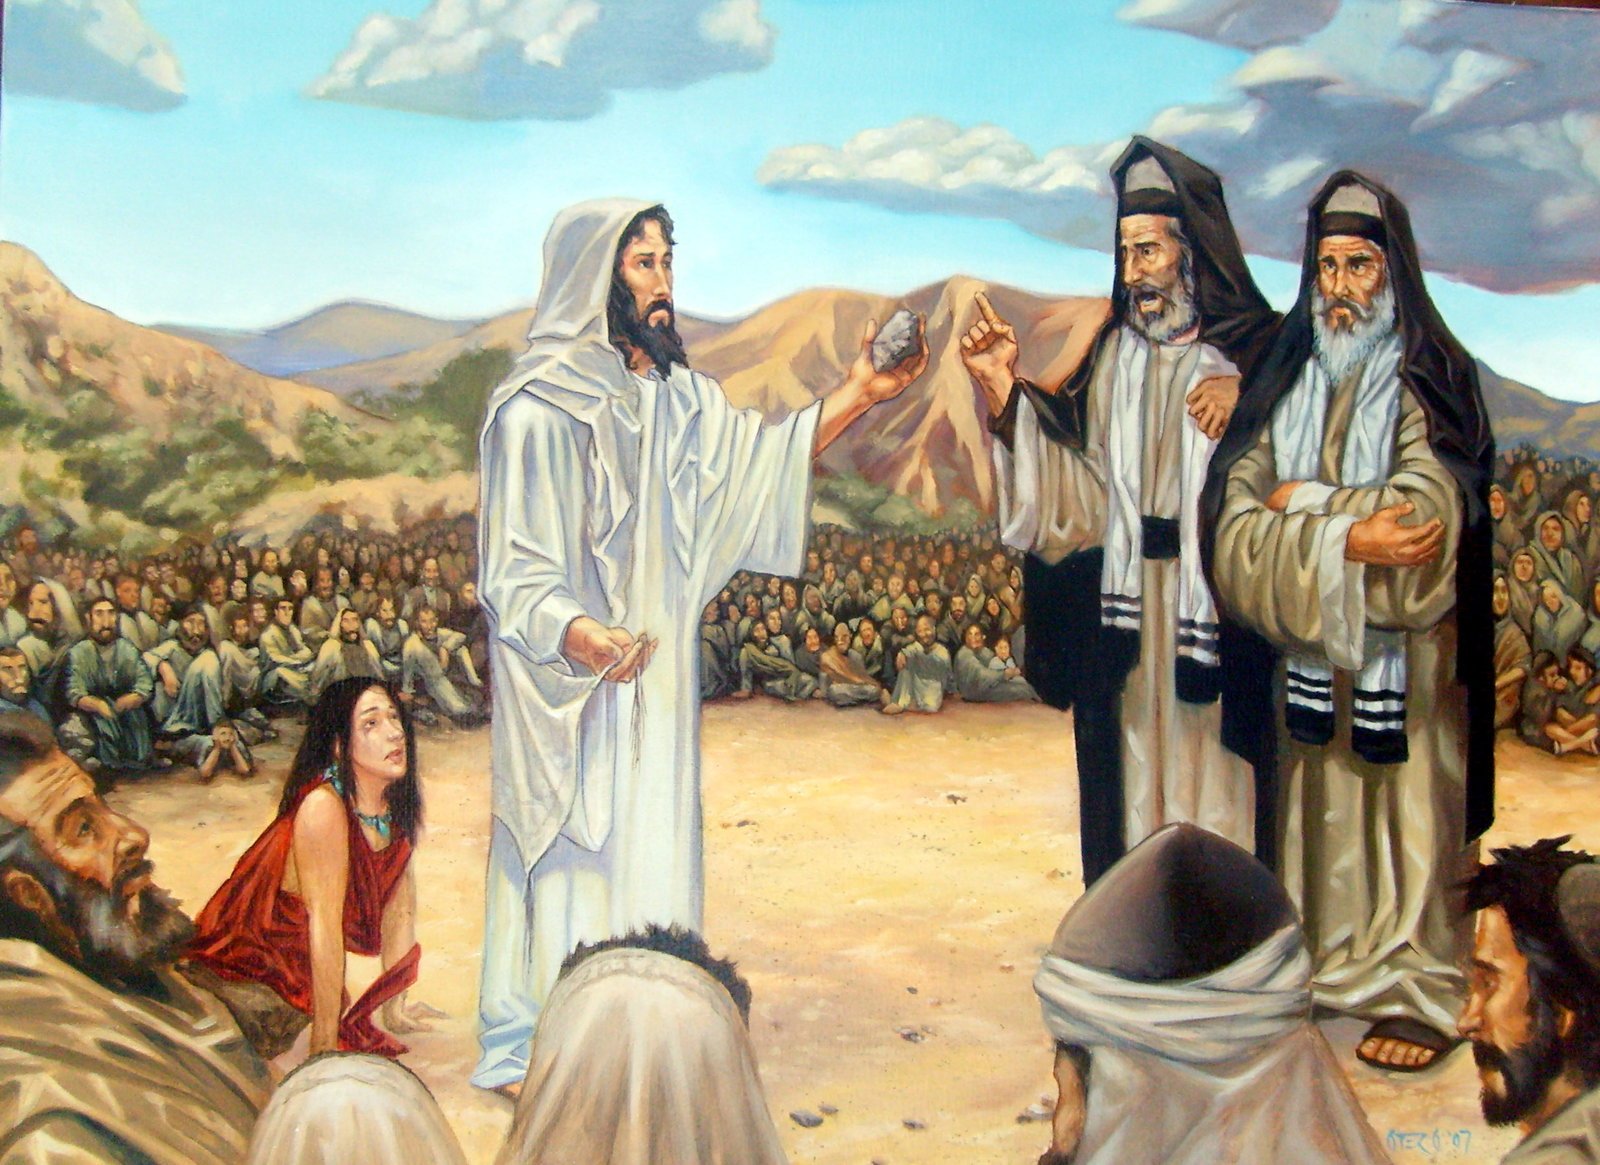 Земля иудея. Jesus Christ фарисеи. Фарисеи саддукеи Книжники. Фарисеи саддукеи иудаизм.